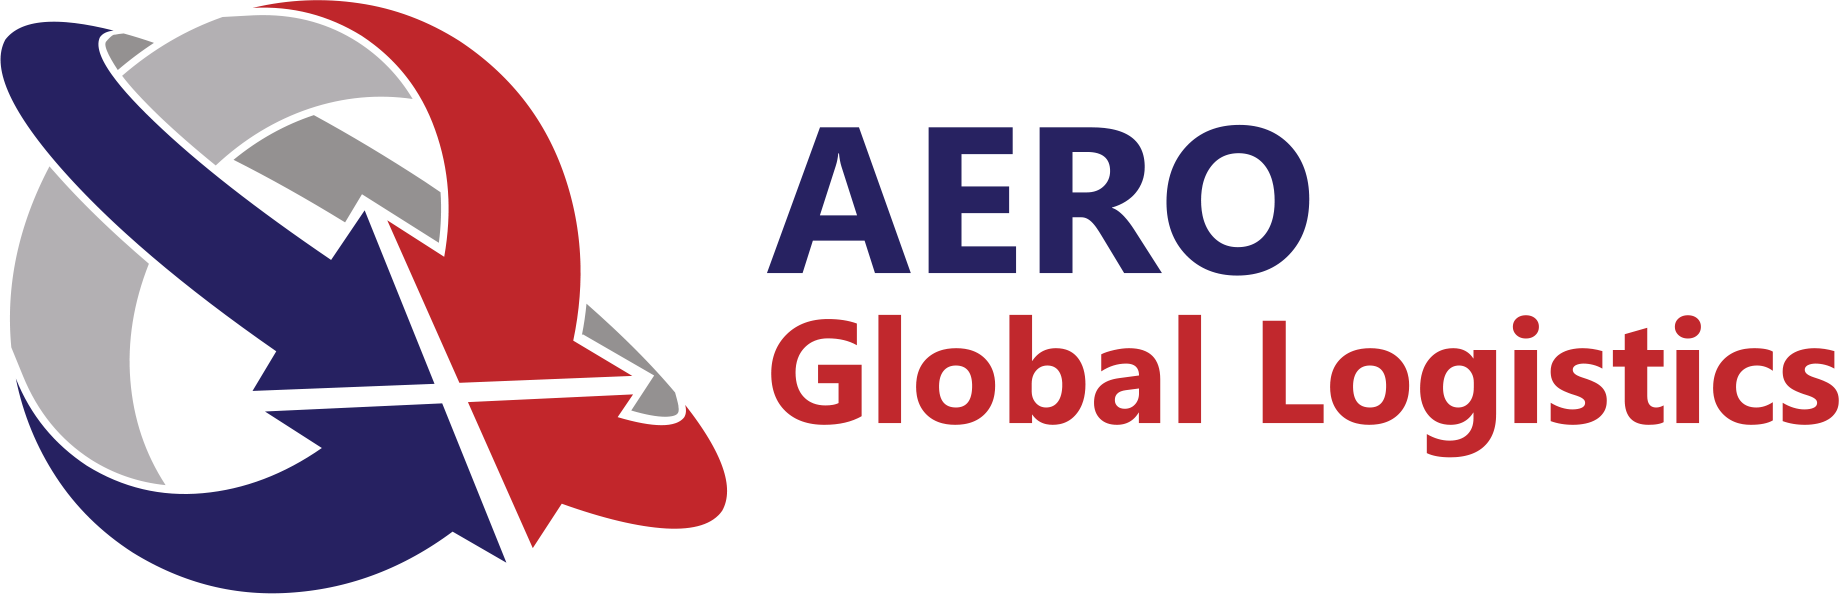 Aero Global Logistics